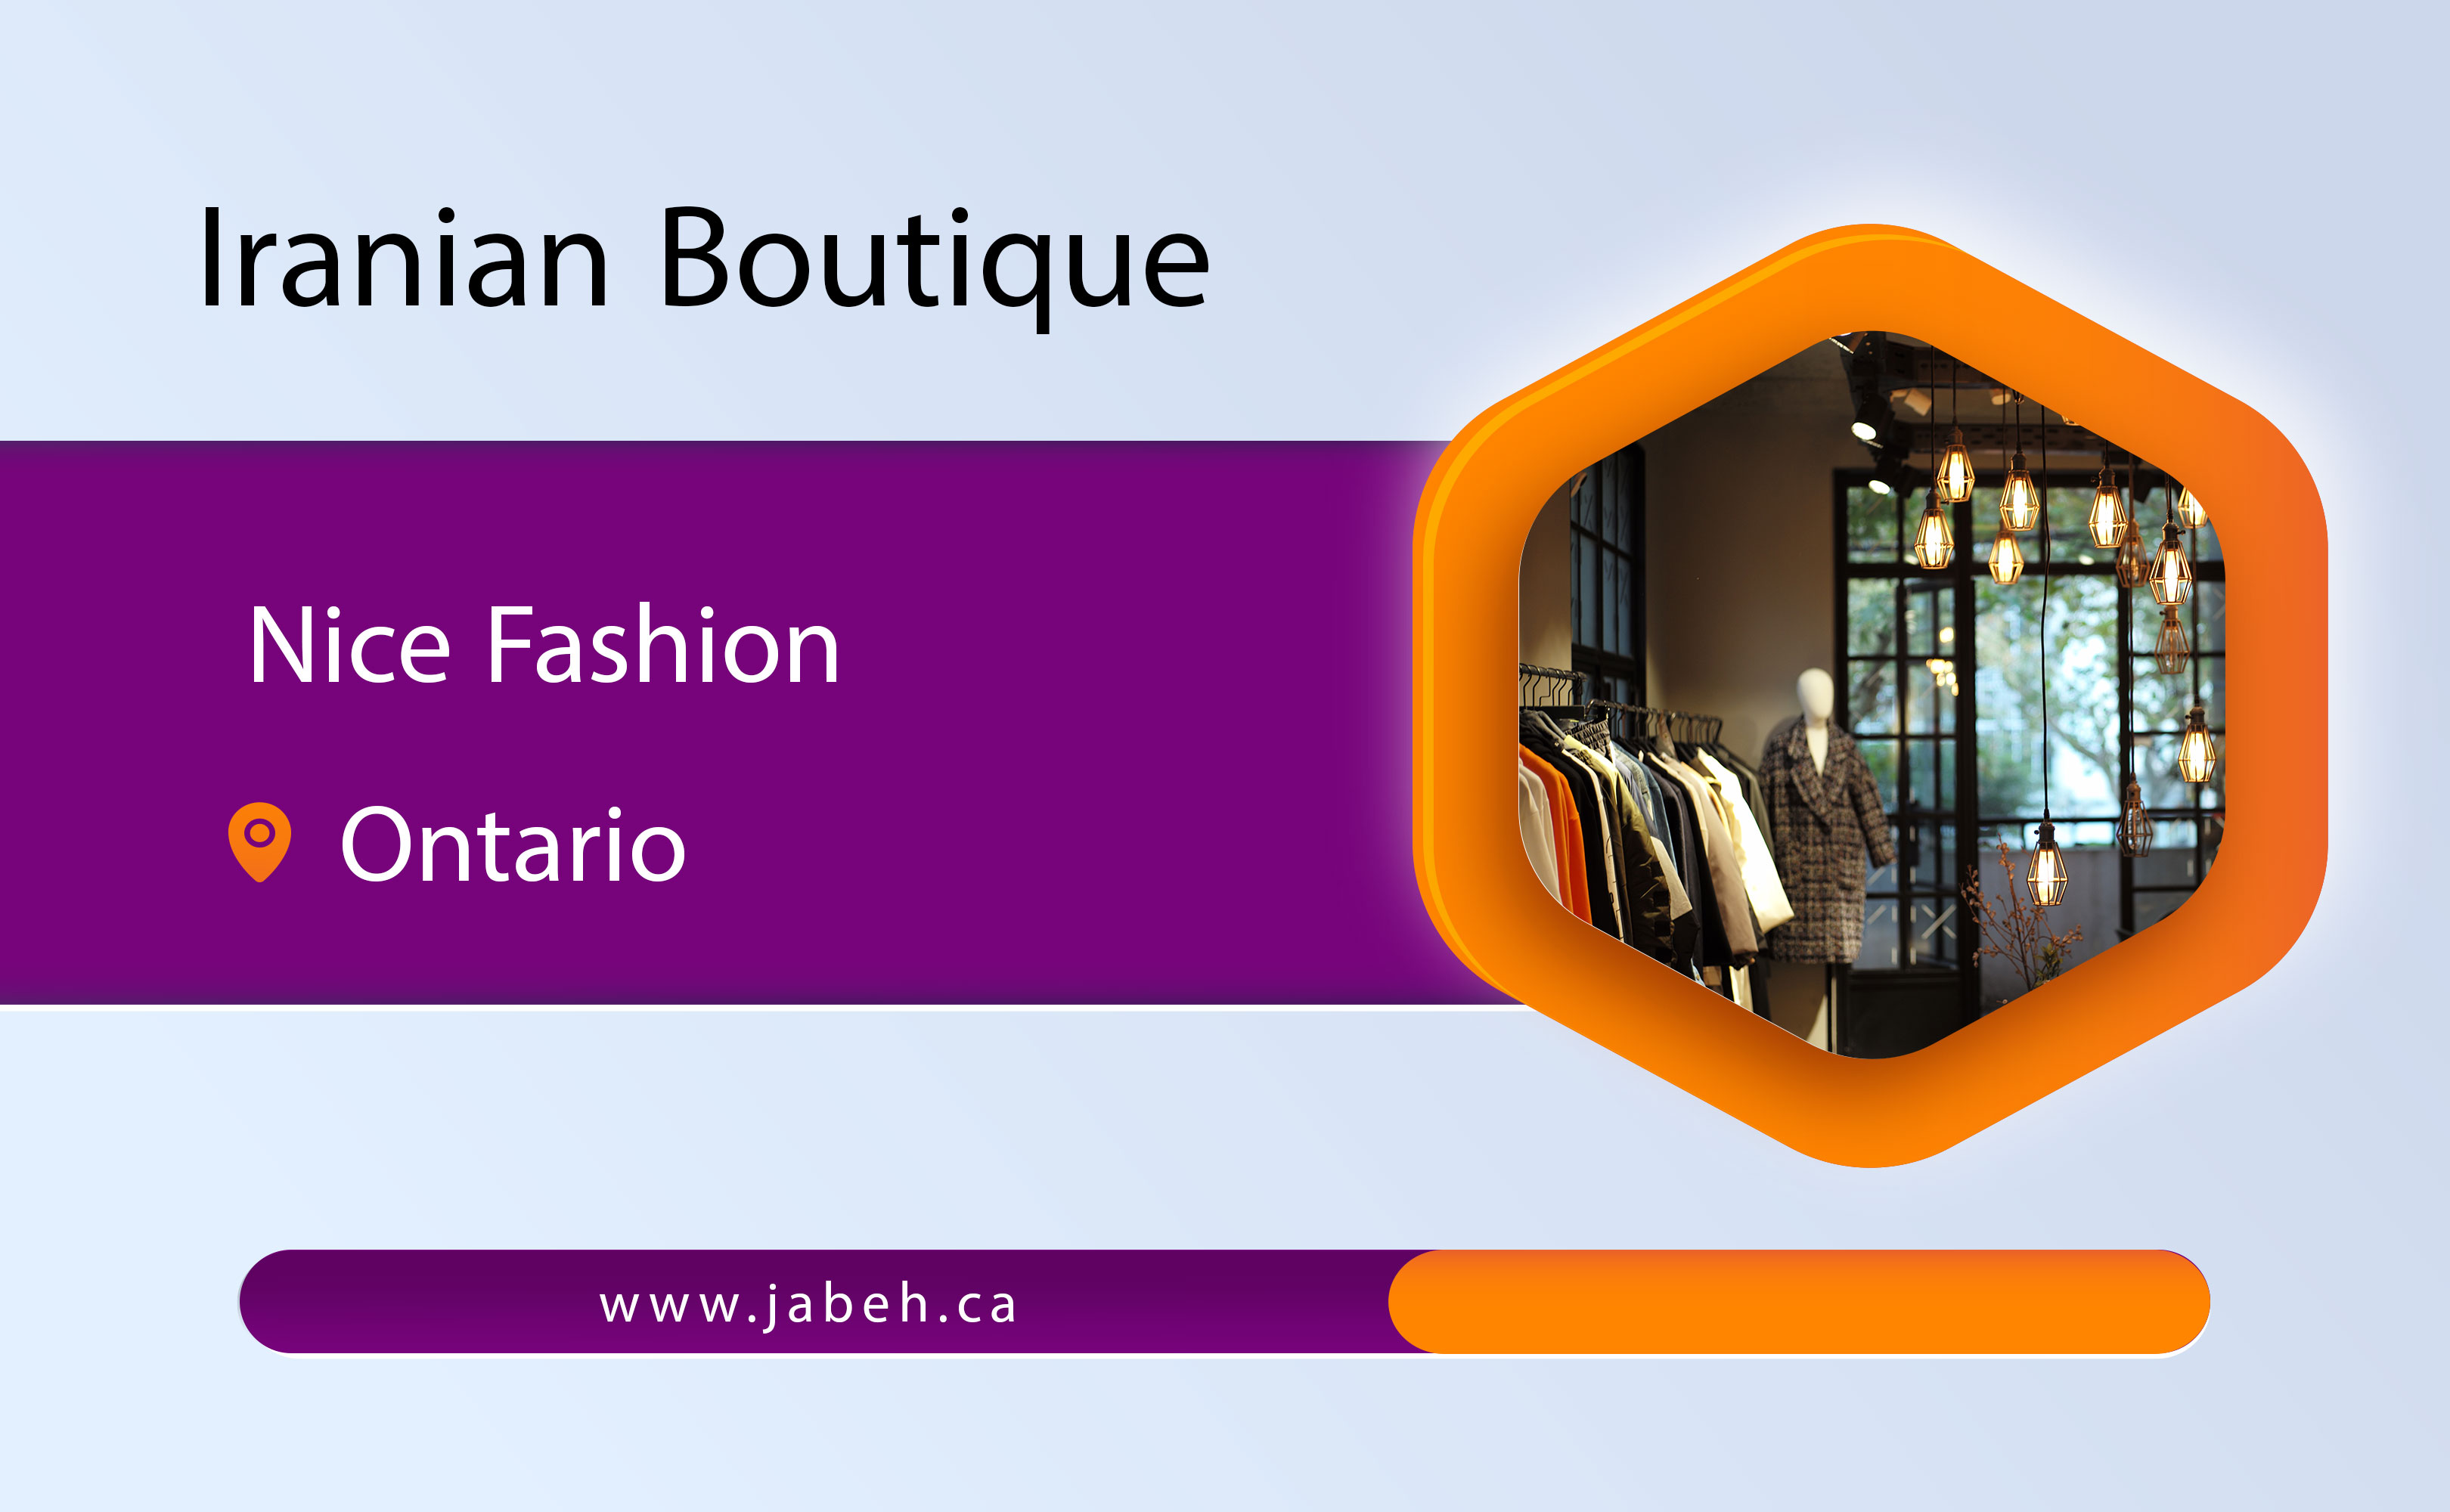 Nico Fashion Iranian Boutique in Ontario